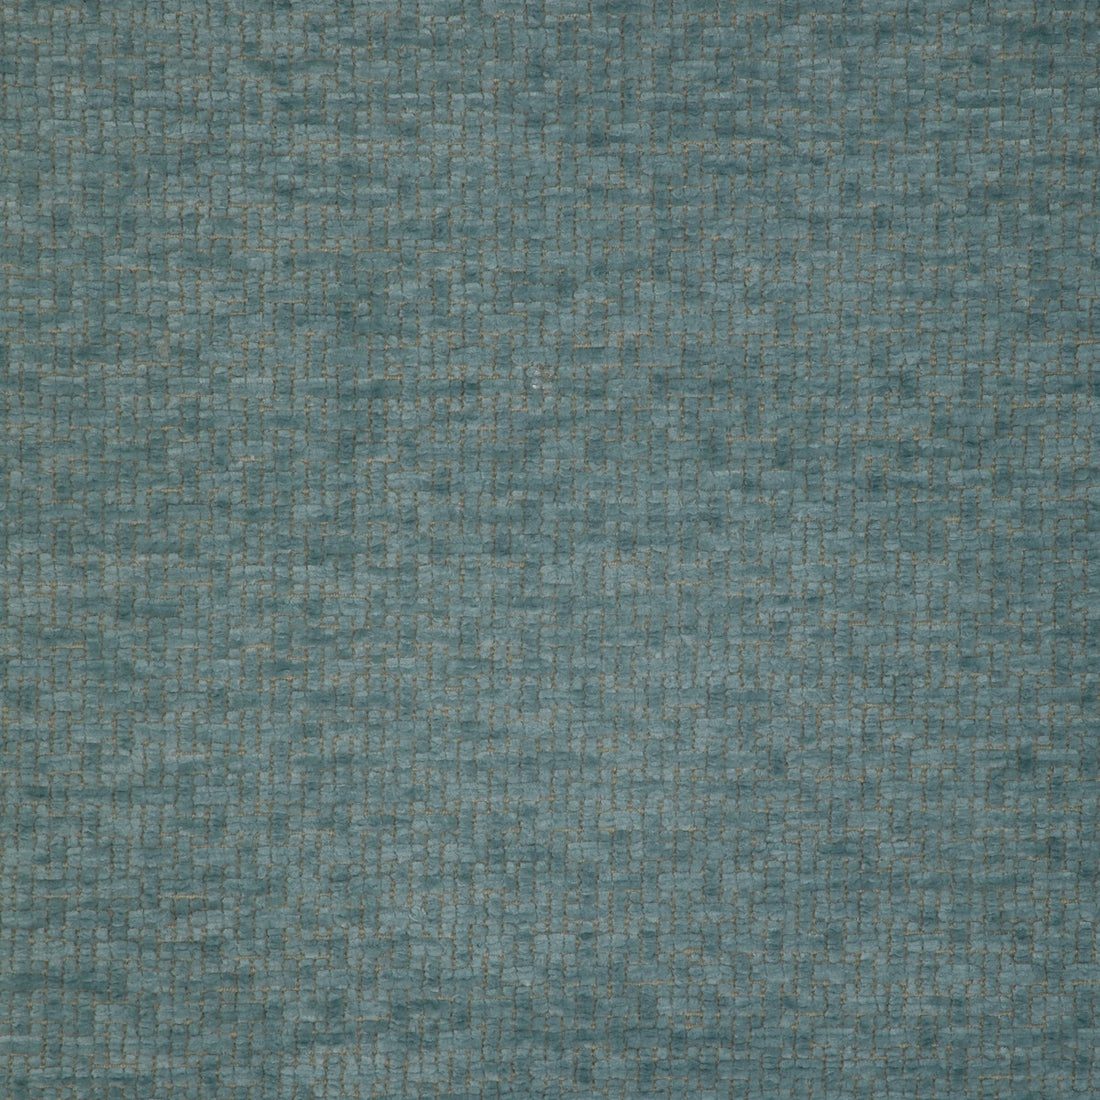 Kravet Smart fabric in 36993-15 color - pattern 36993.15.0 - by Kravet Smart in the Performance Kravetarmor collection